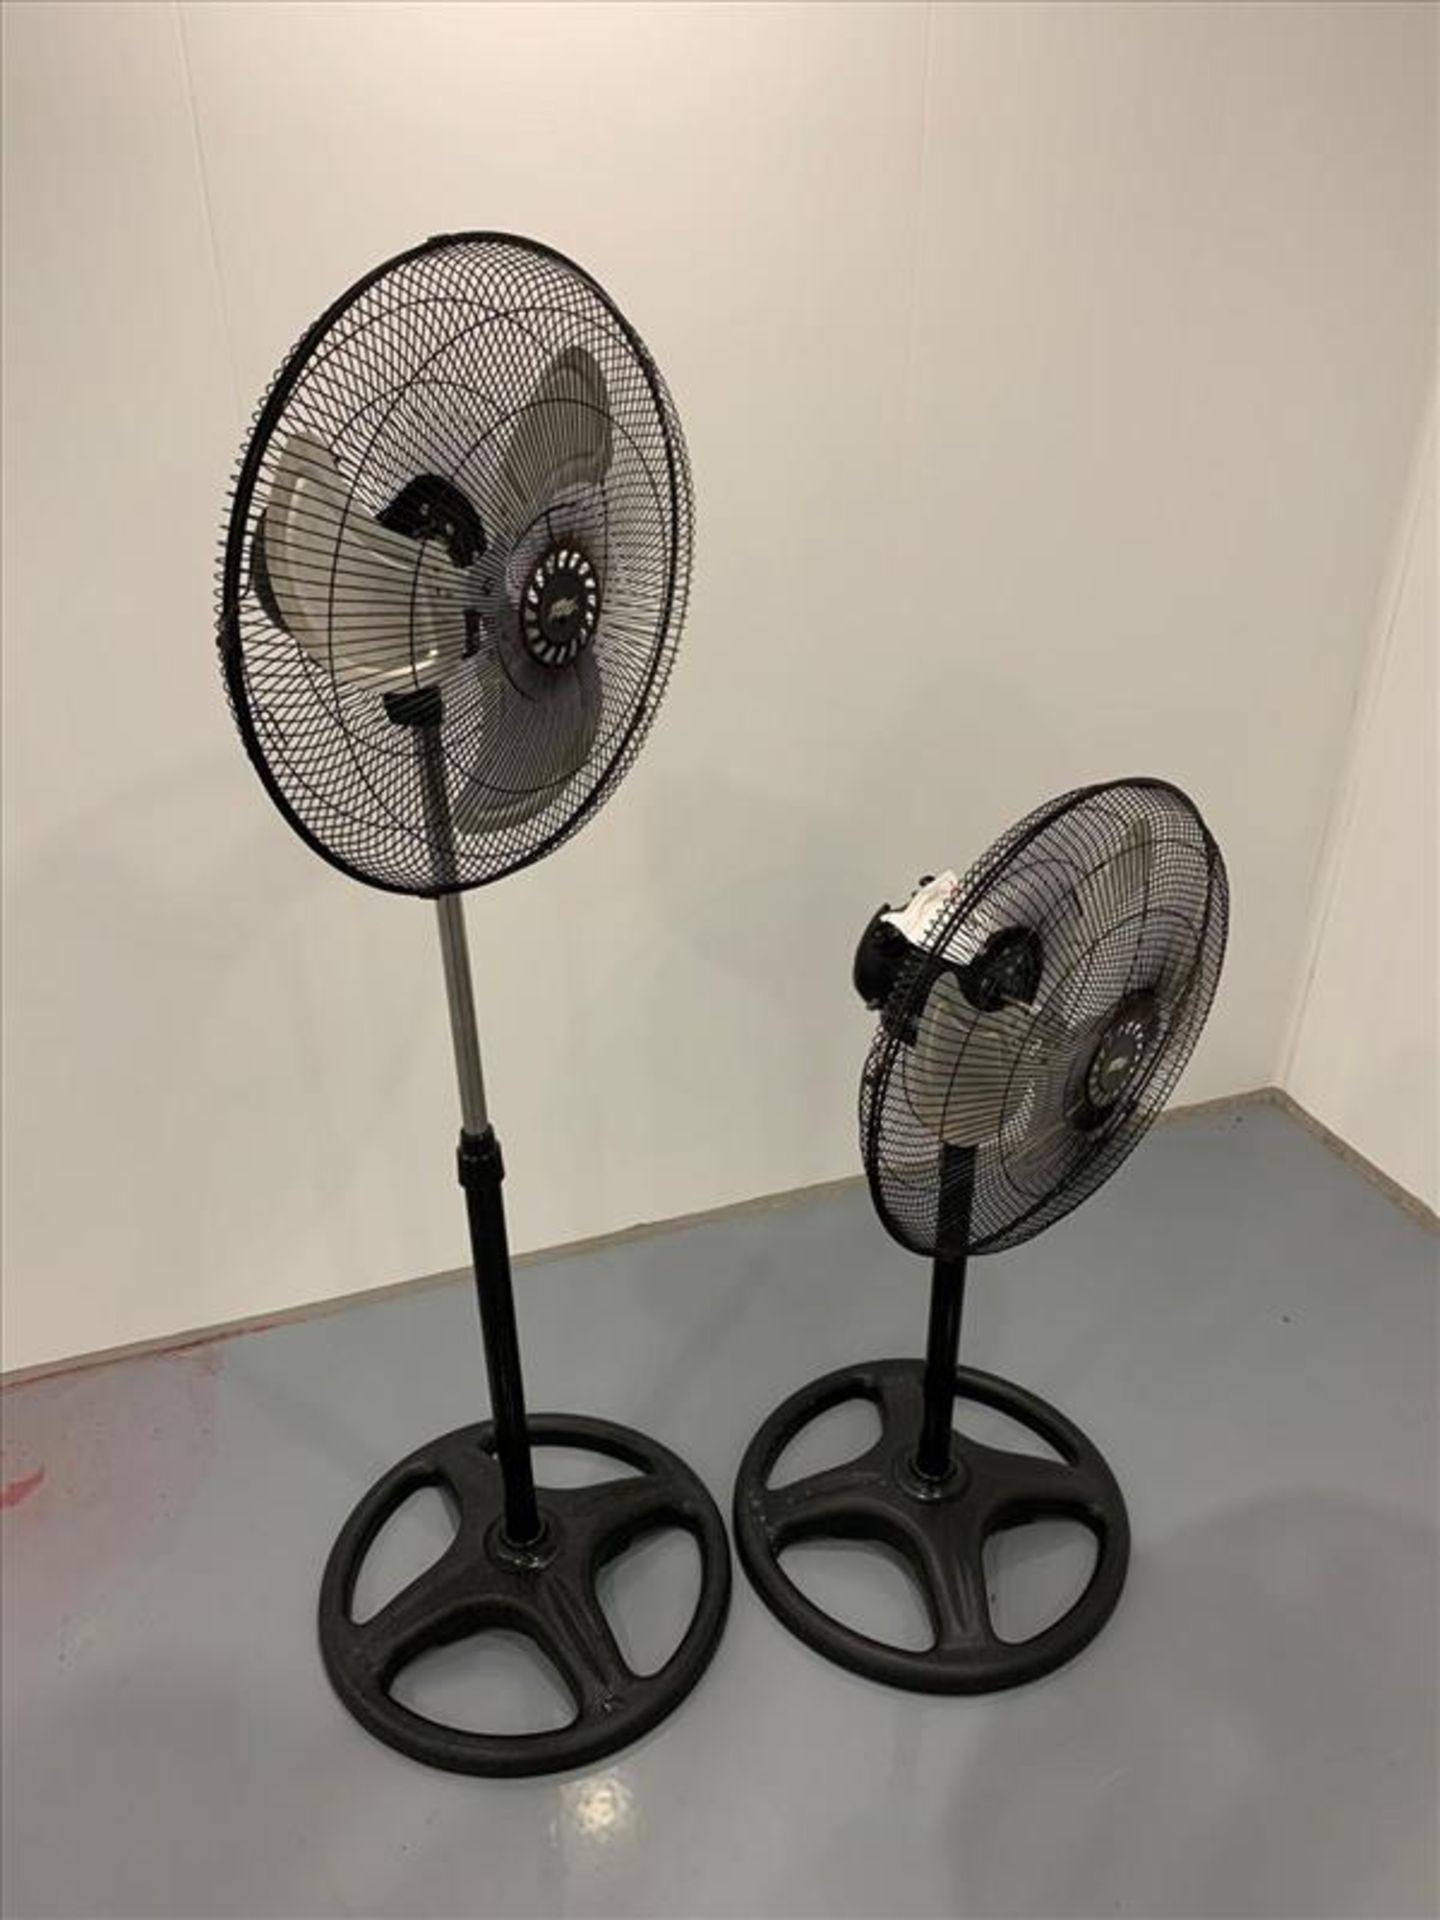 (2) Cool works pedestal fans (no cords)